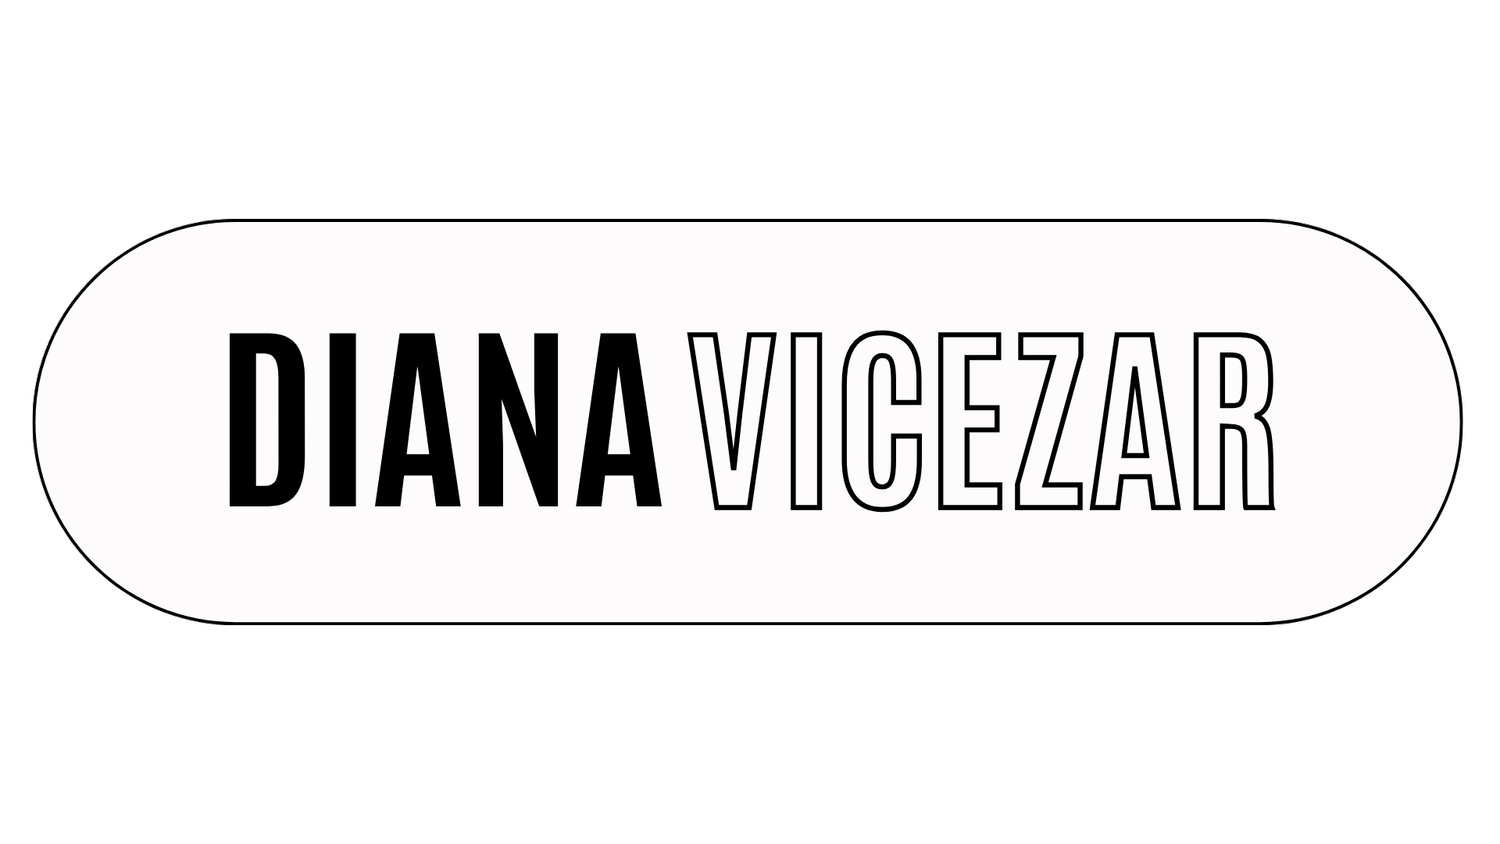 Diana Vicezar